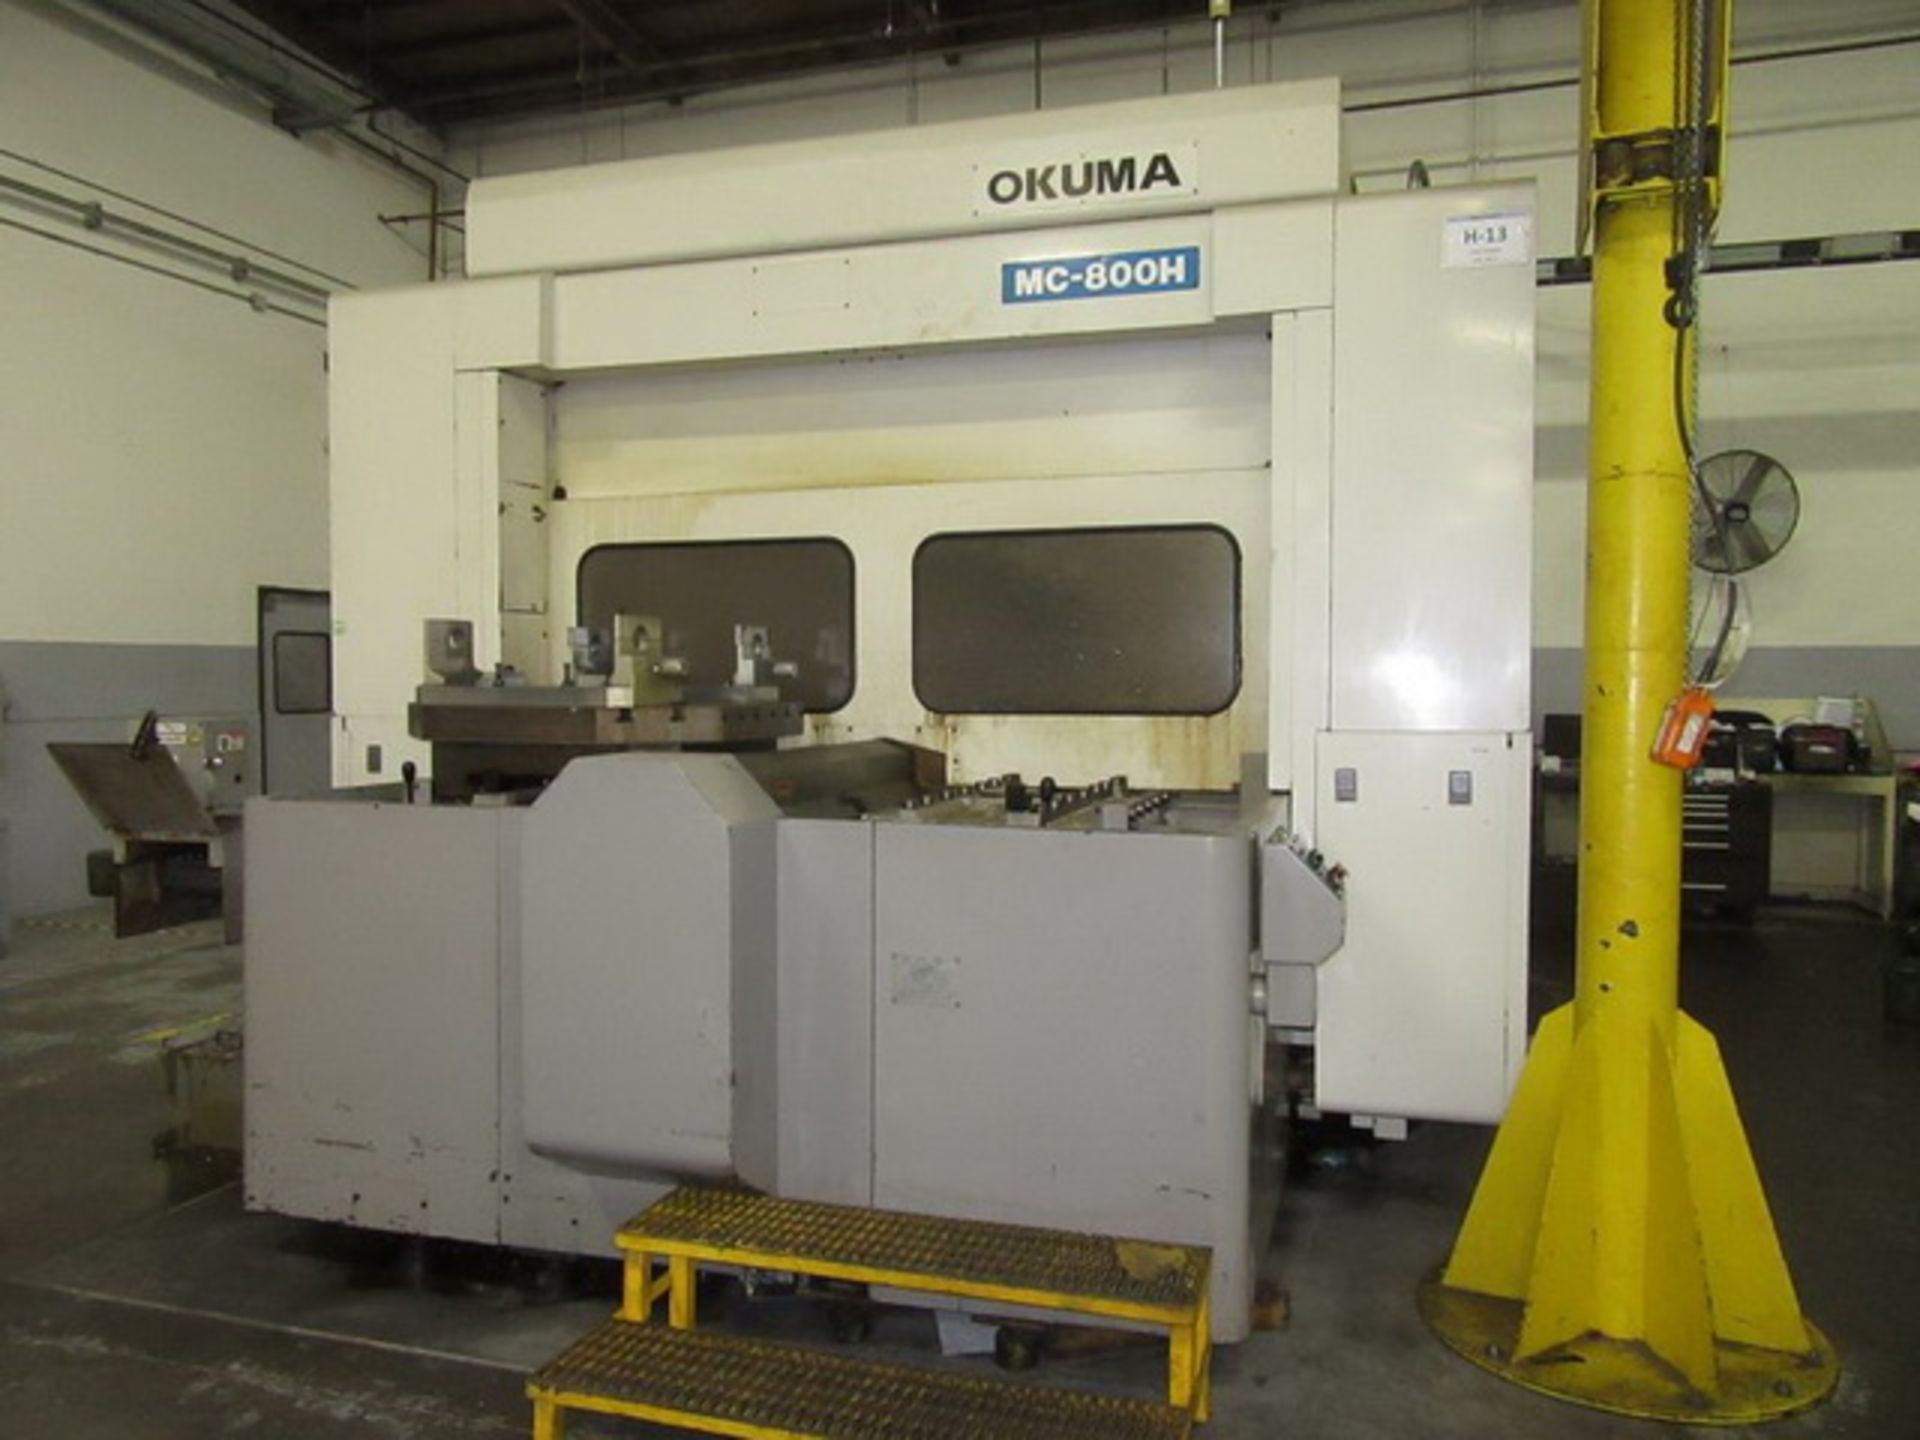 OKUMA MC-800H CNC MACHINING CENTER, HORIZONTAL, YEAR-1999 S/N-73, 4-AXIS, SINGLE SPINDLE, 30-HP, 4,